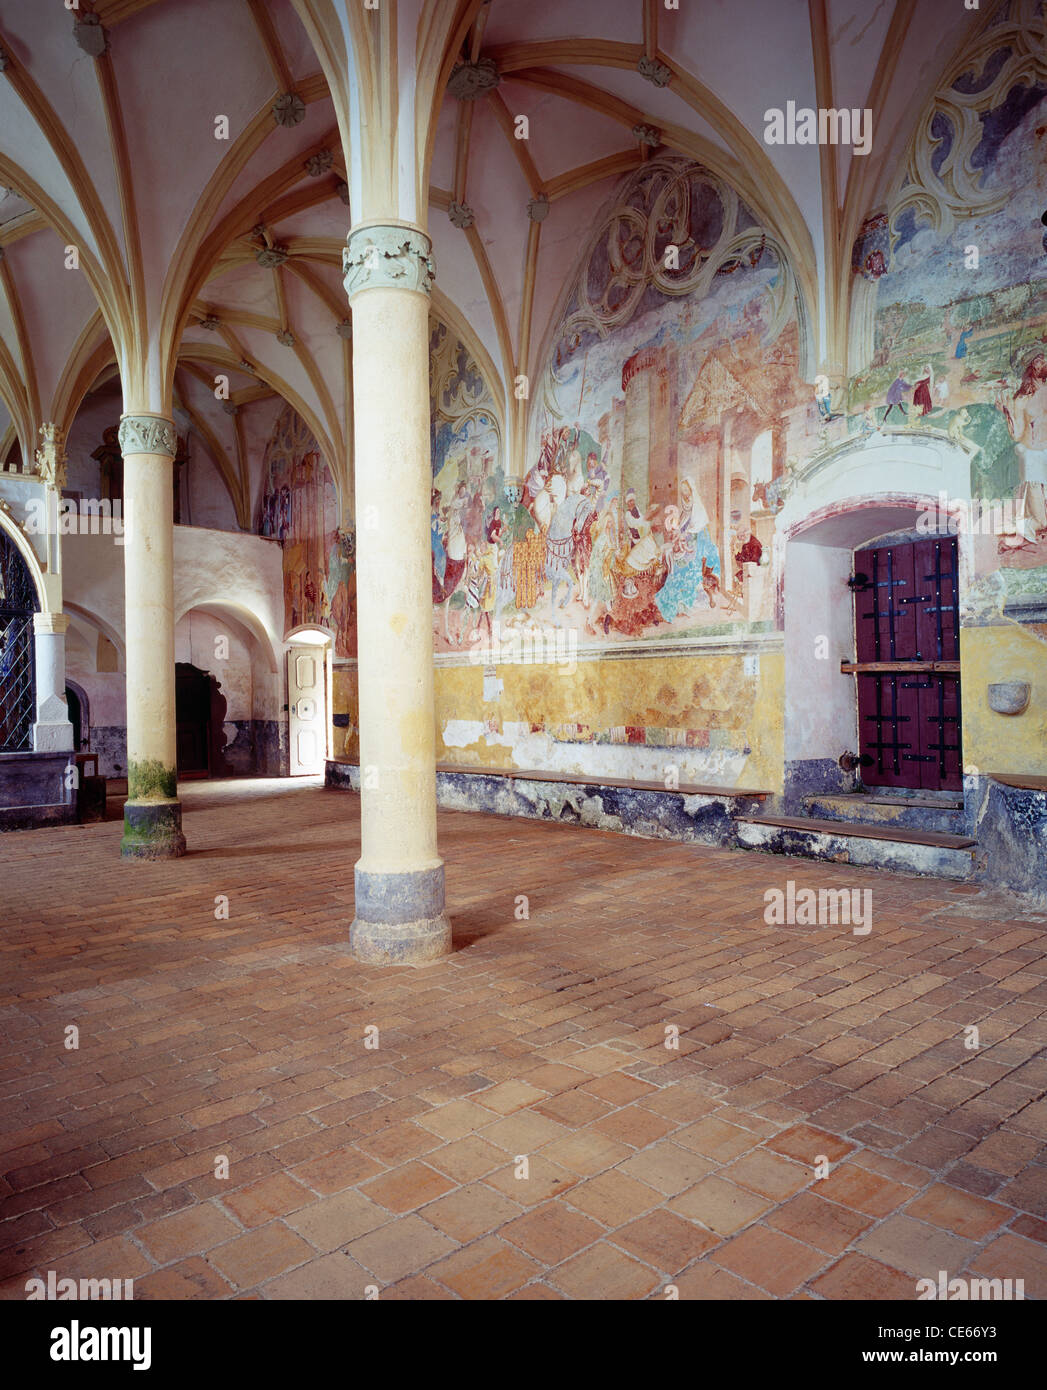 Frescos inside the Church of St Primus and St Feliian, Stahovica, near Kamnik, Gorenjska, Slovenia. Stock Photo